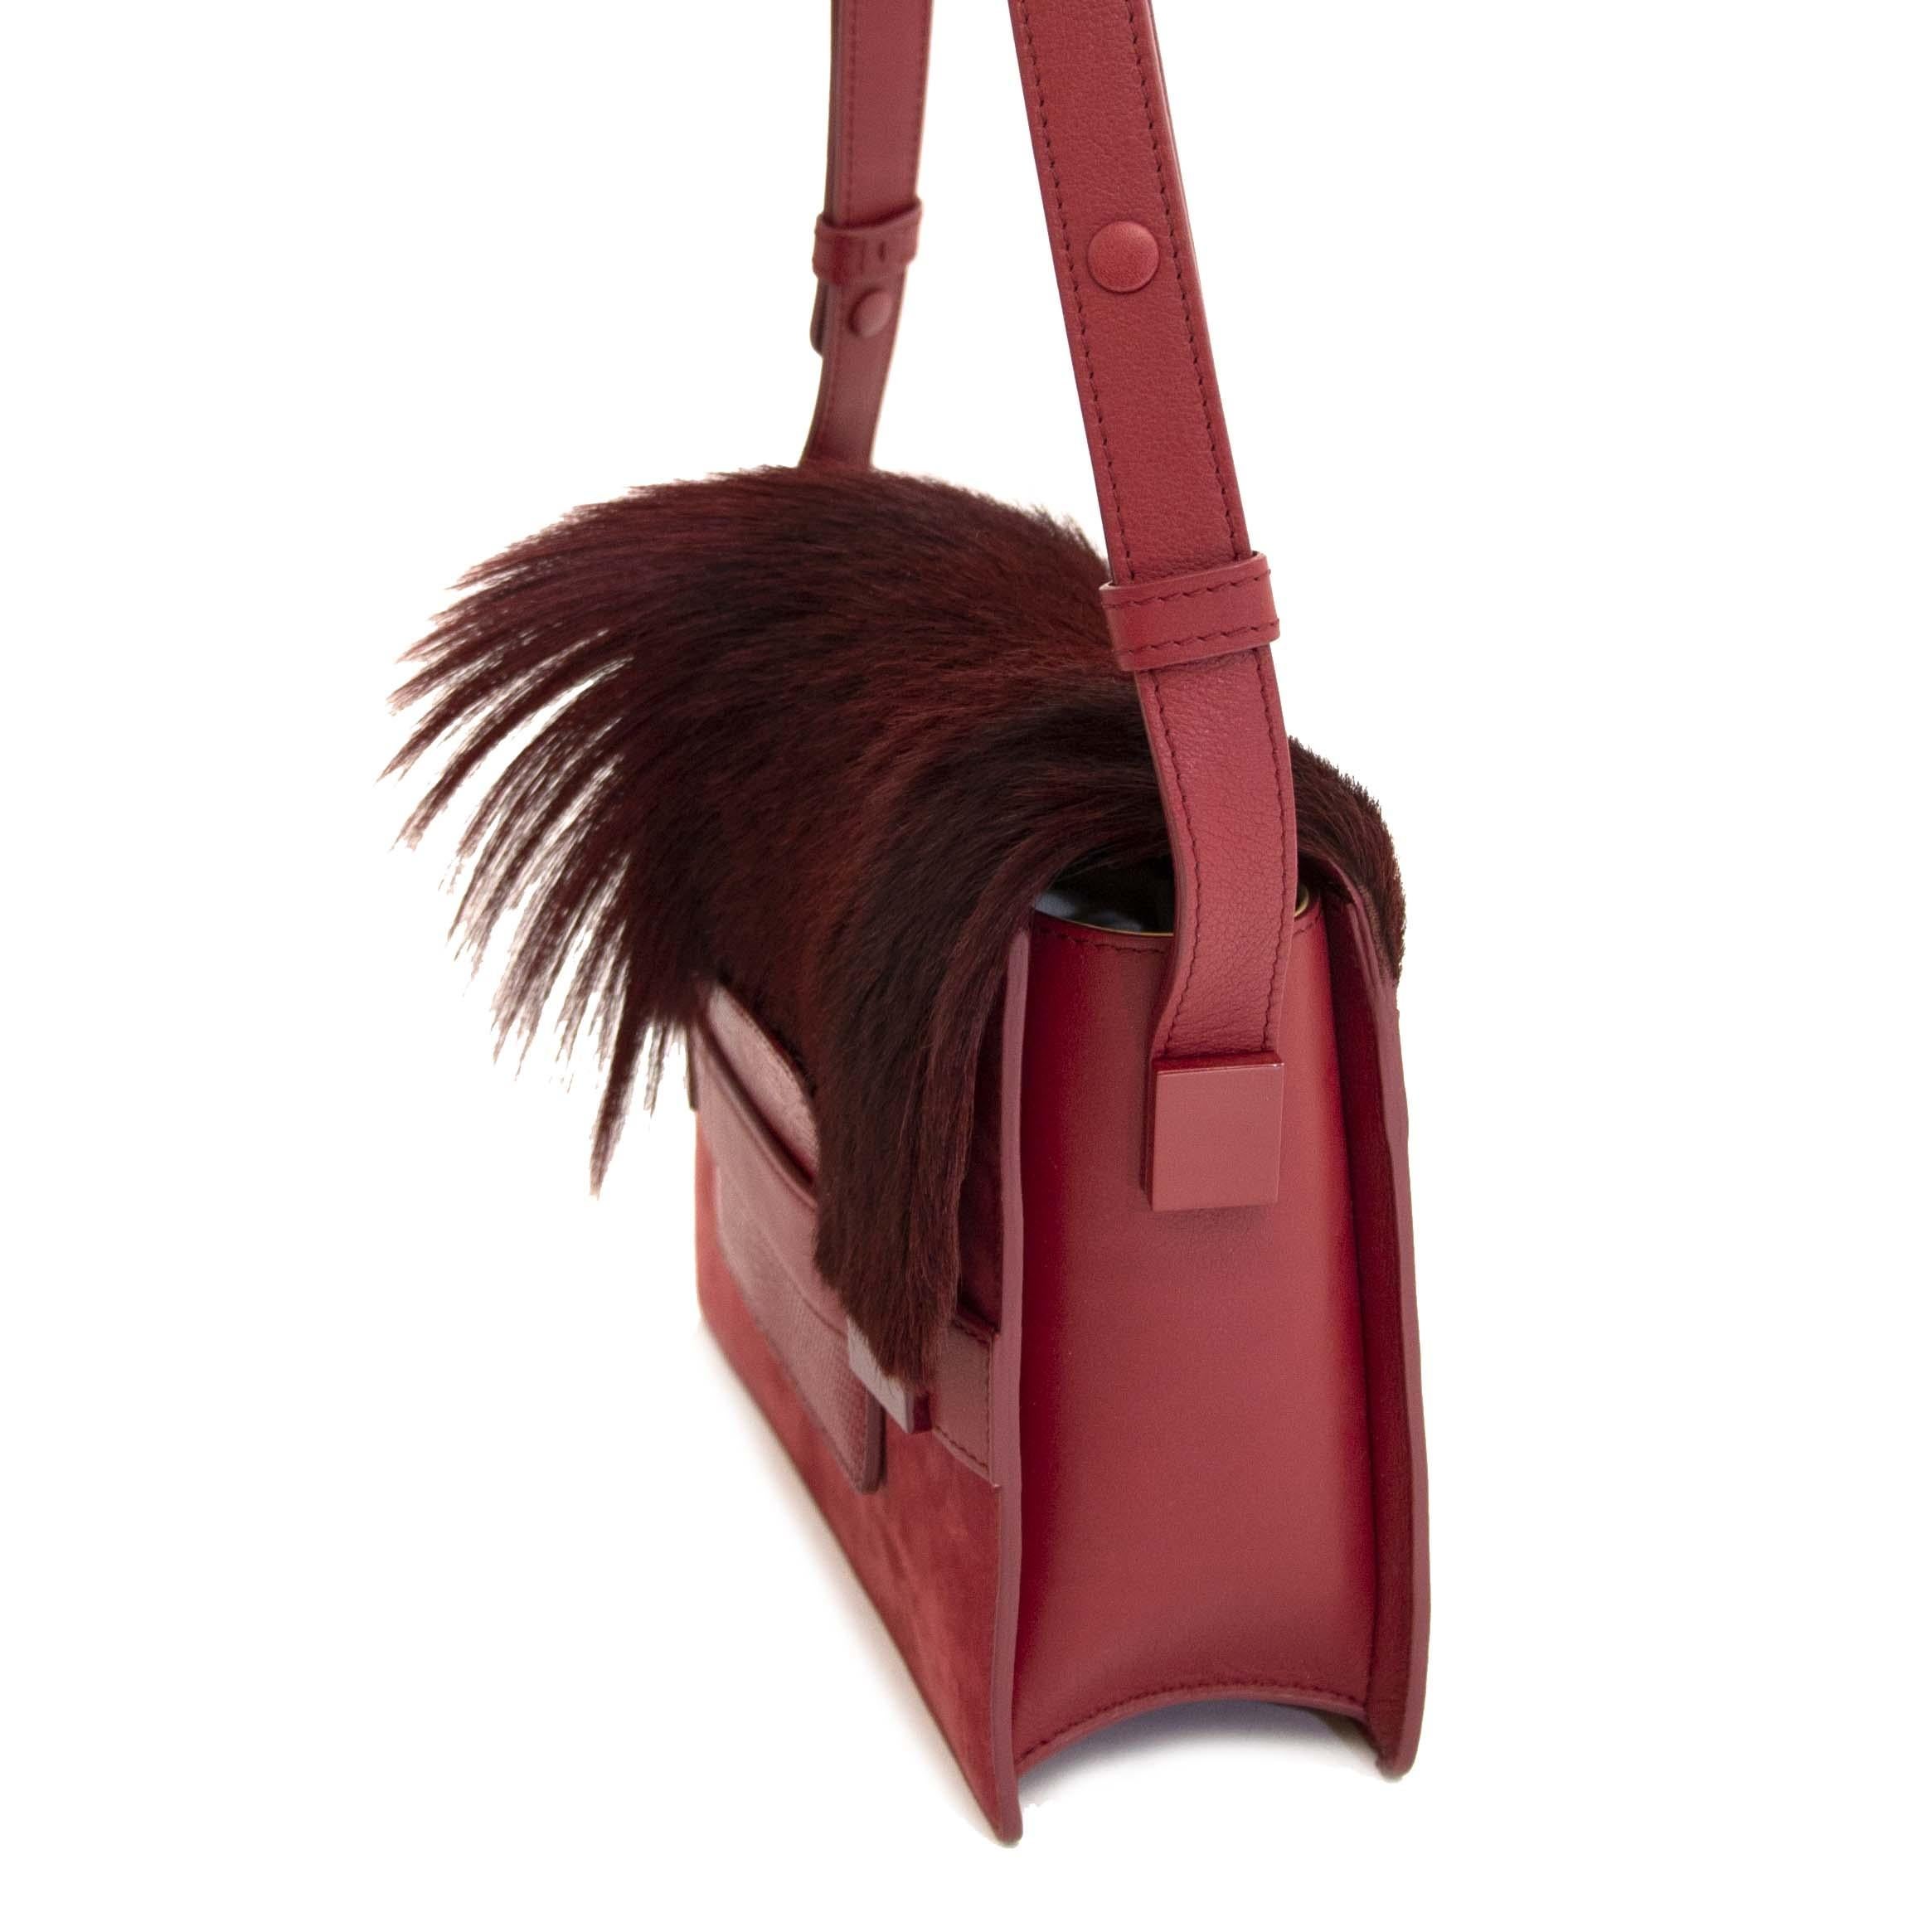 springbok leather handbags